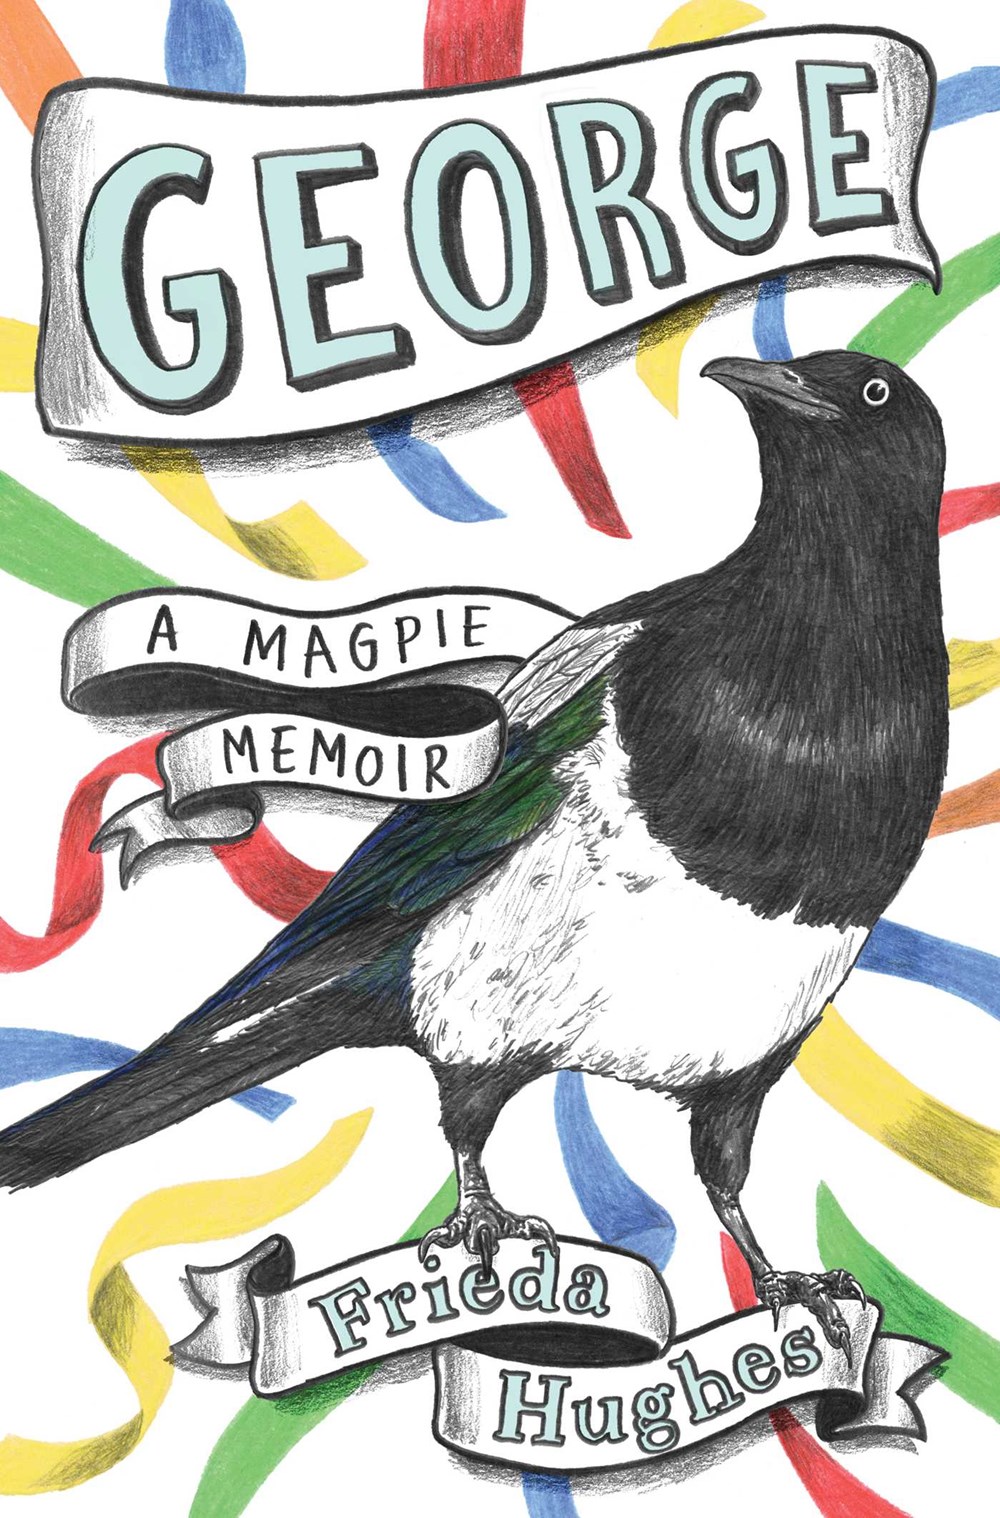 George, A Magpie Memoir by Frieda Hughes